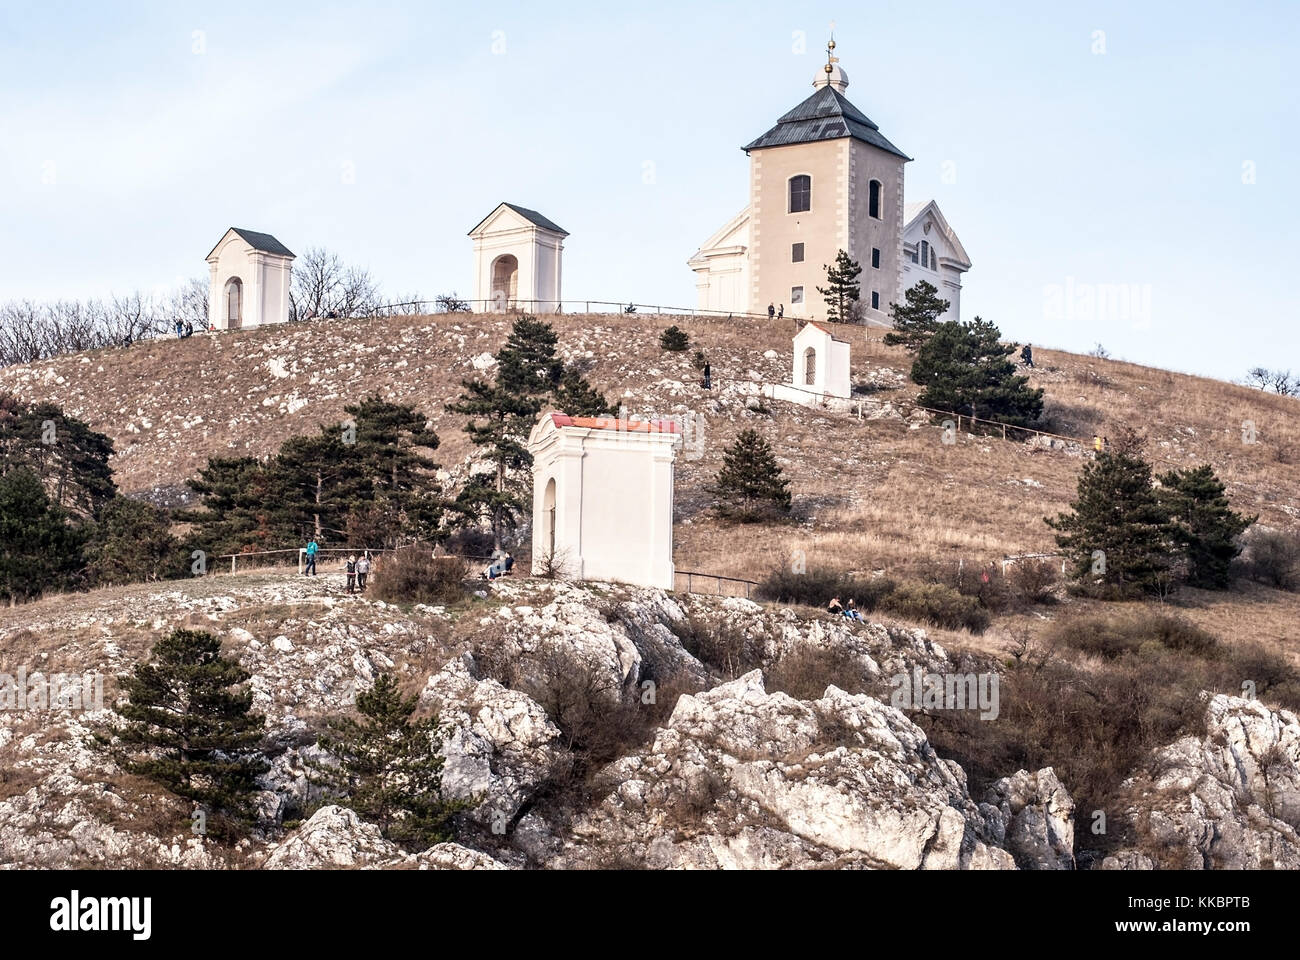 Svaty kopecek hill above Mikulov city in Czech republic with church, chapel, limestone rocks, grass and clear sky during springtime Stock Photo